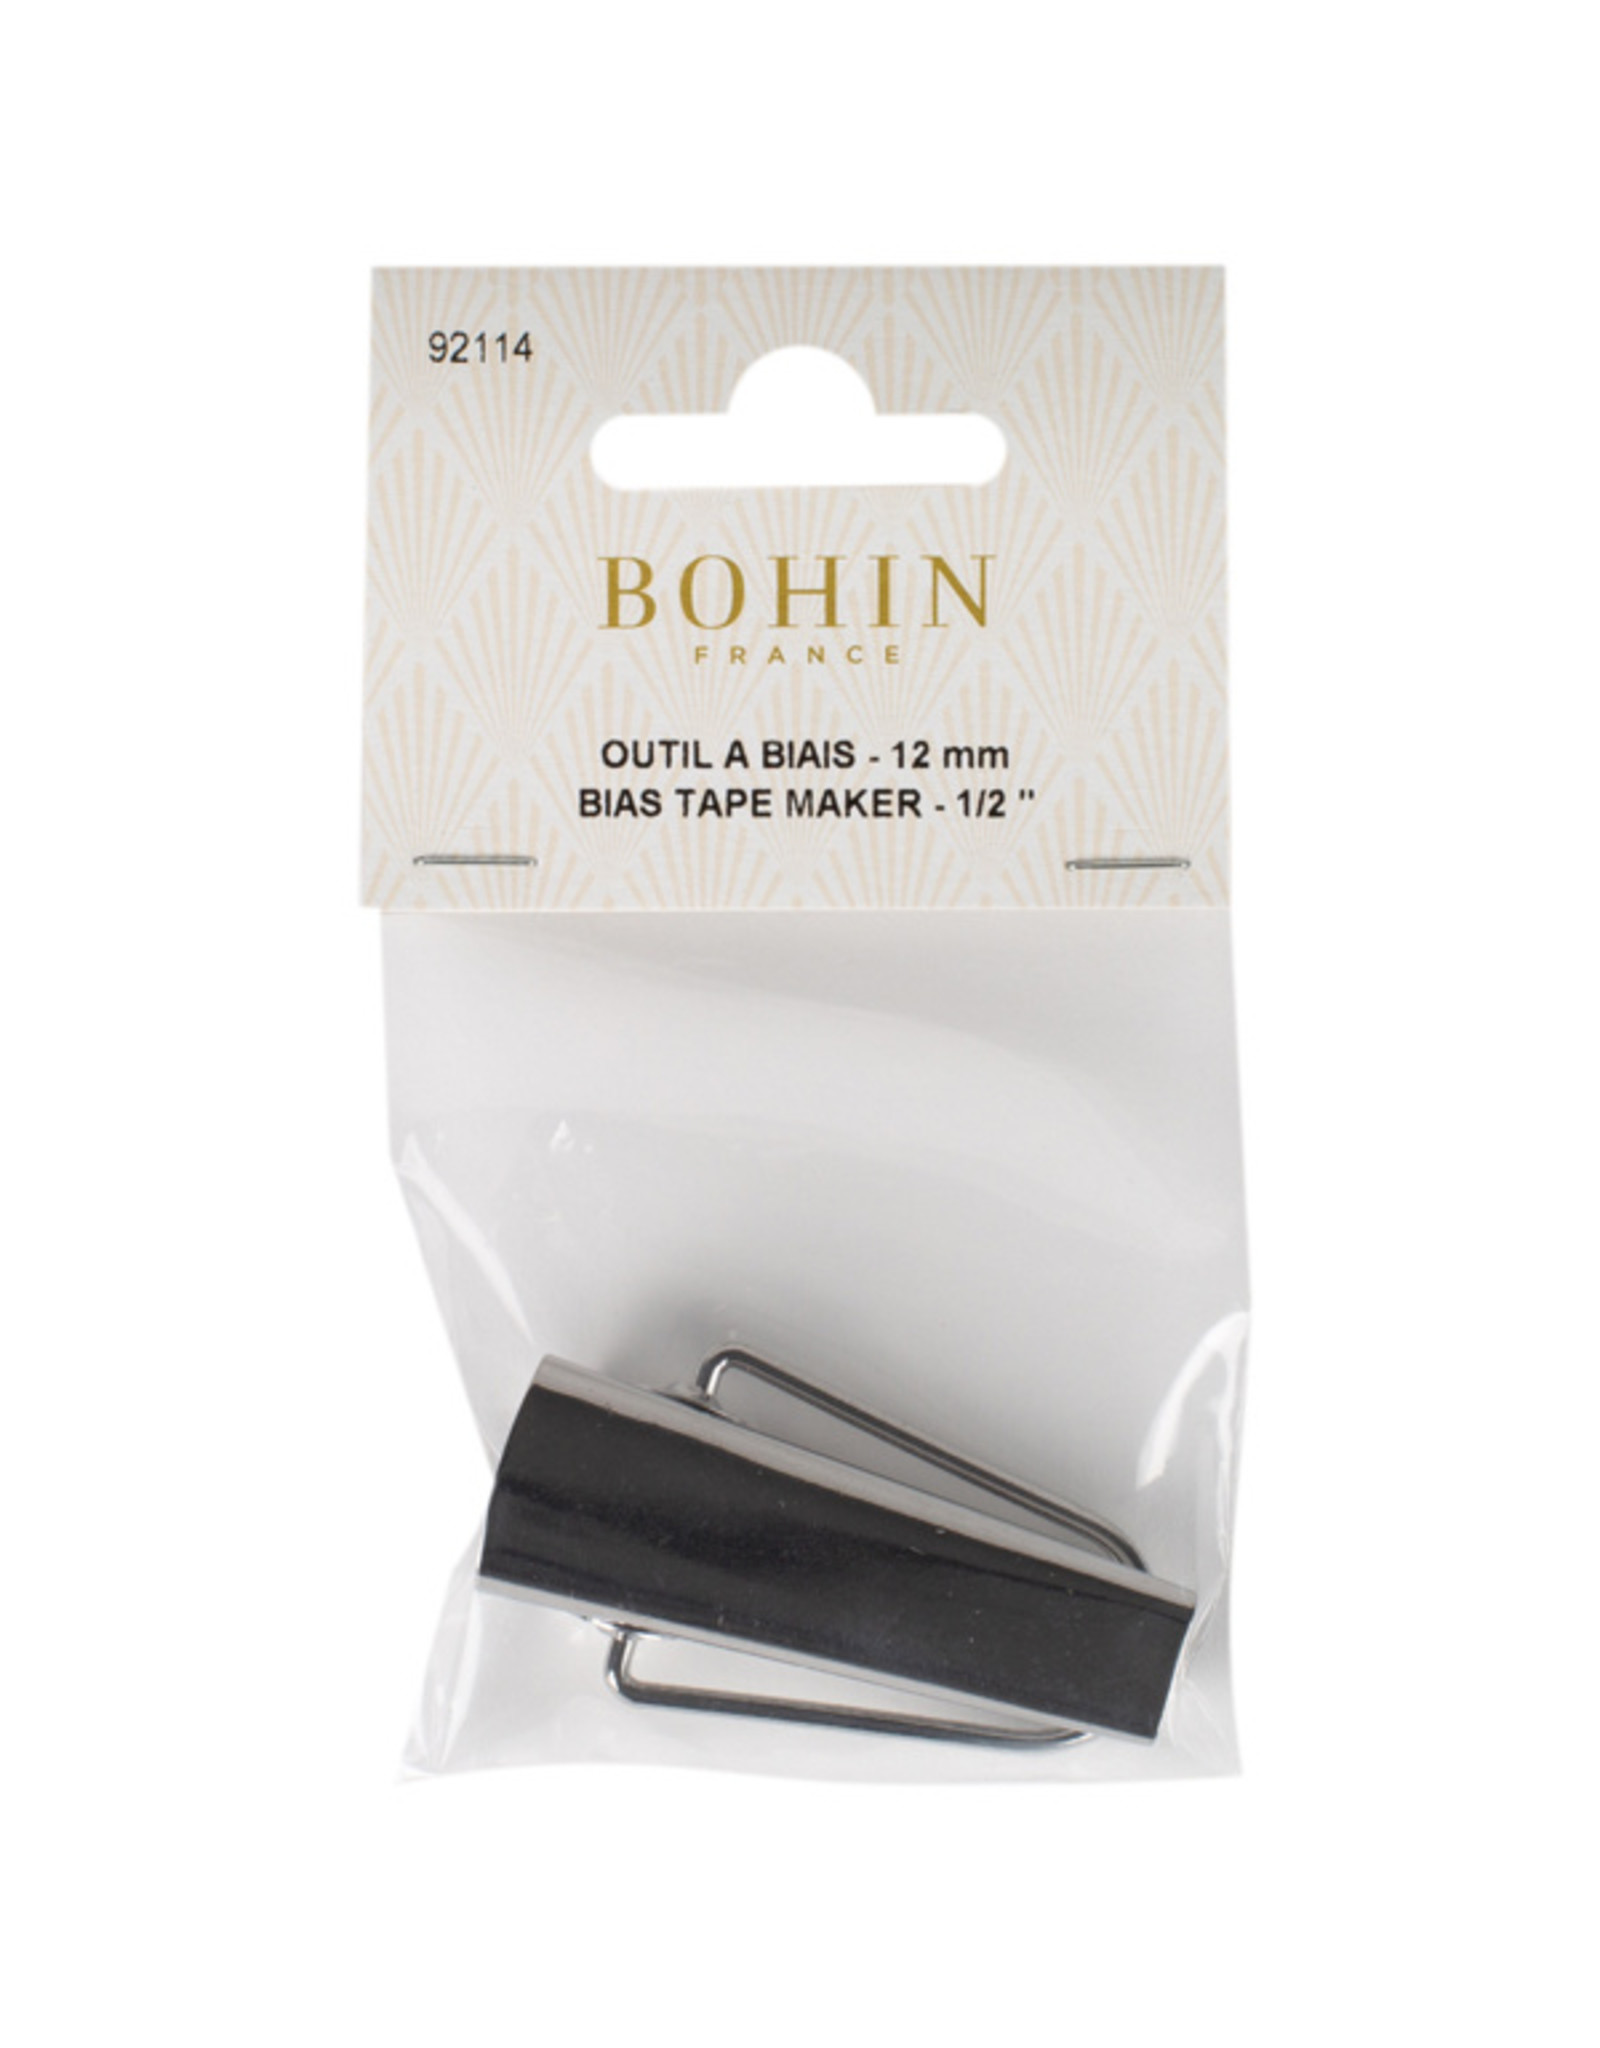 Bohin Bias Tape Maker 12 mm